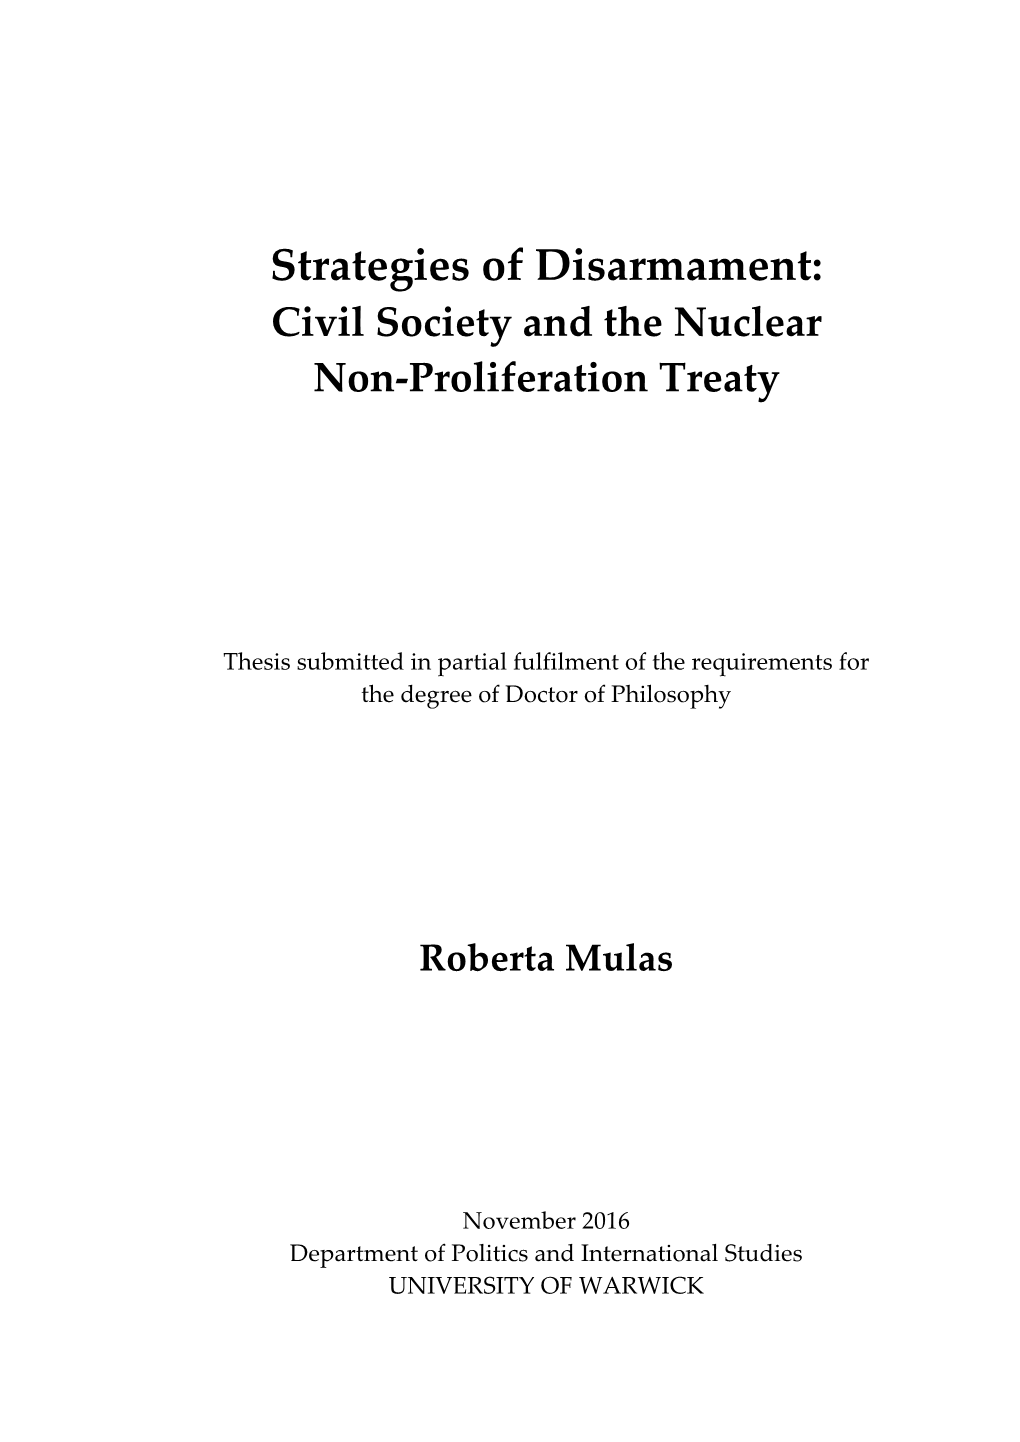 Strategies of Disarmament: Civil Society and the Nuclear Non-Proliferation Treaty